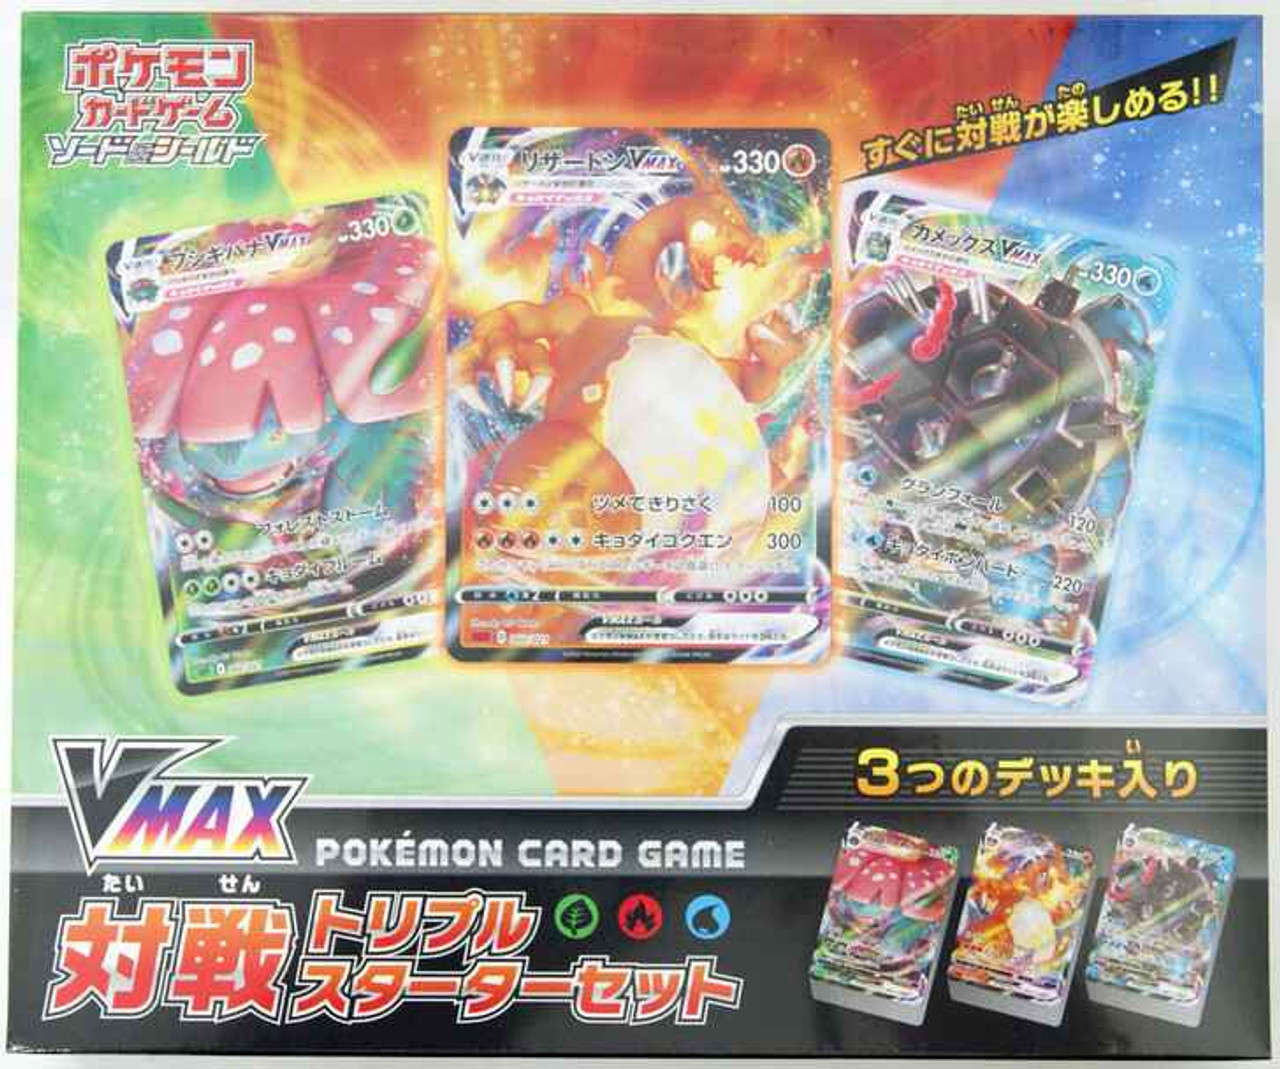 300 Unique Pokemon Gx Trading Cards Game Shining Takara Tomy